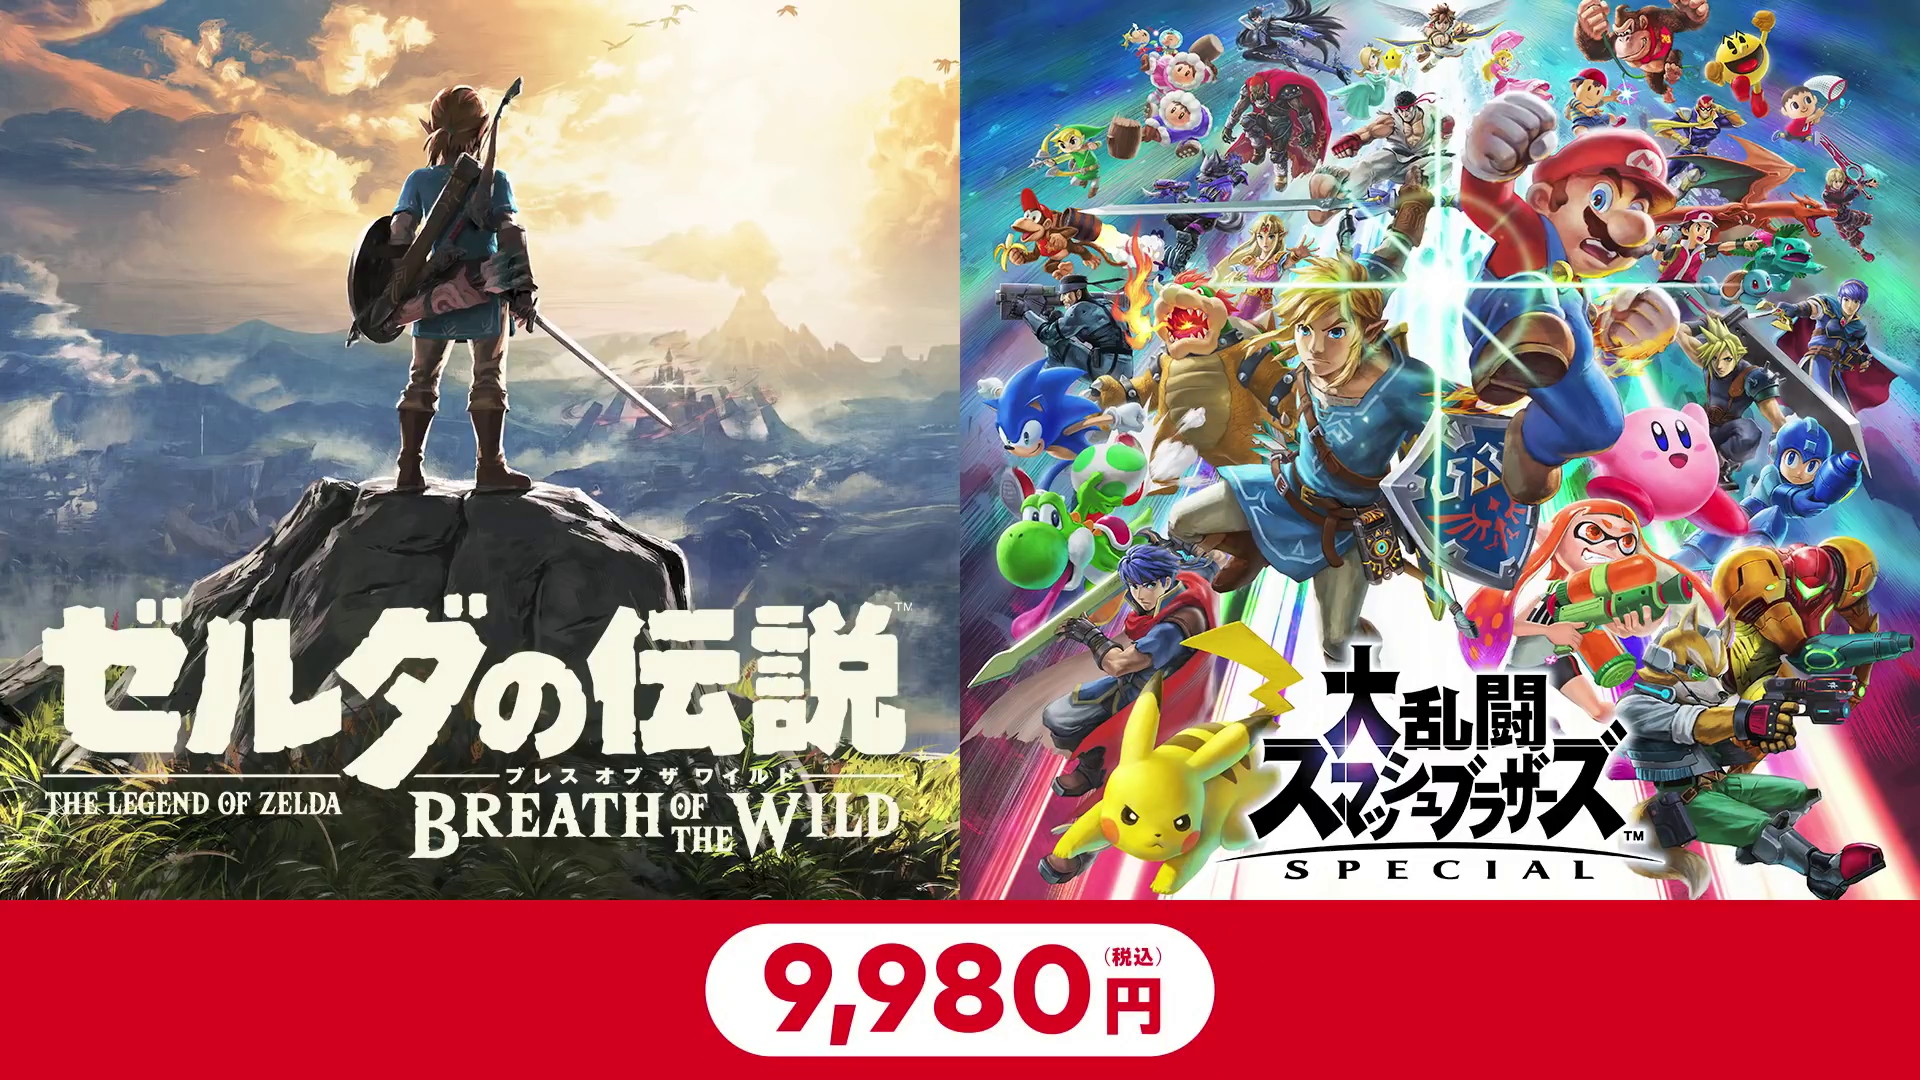 Nintendo Switchの対象ゲーム2本が9980円で購入できるオンライン加入者 